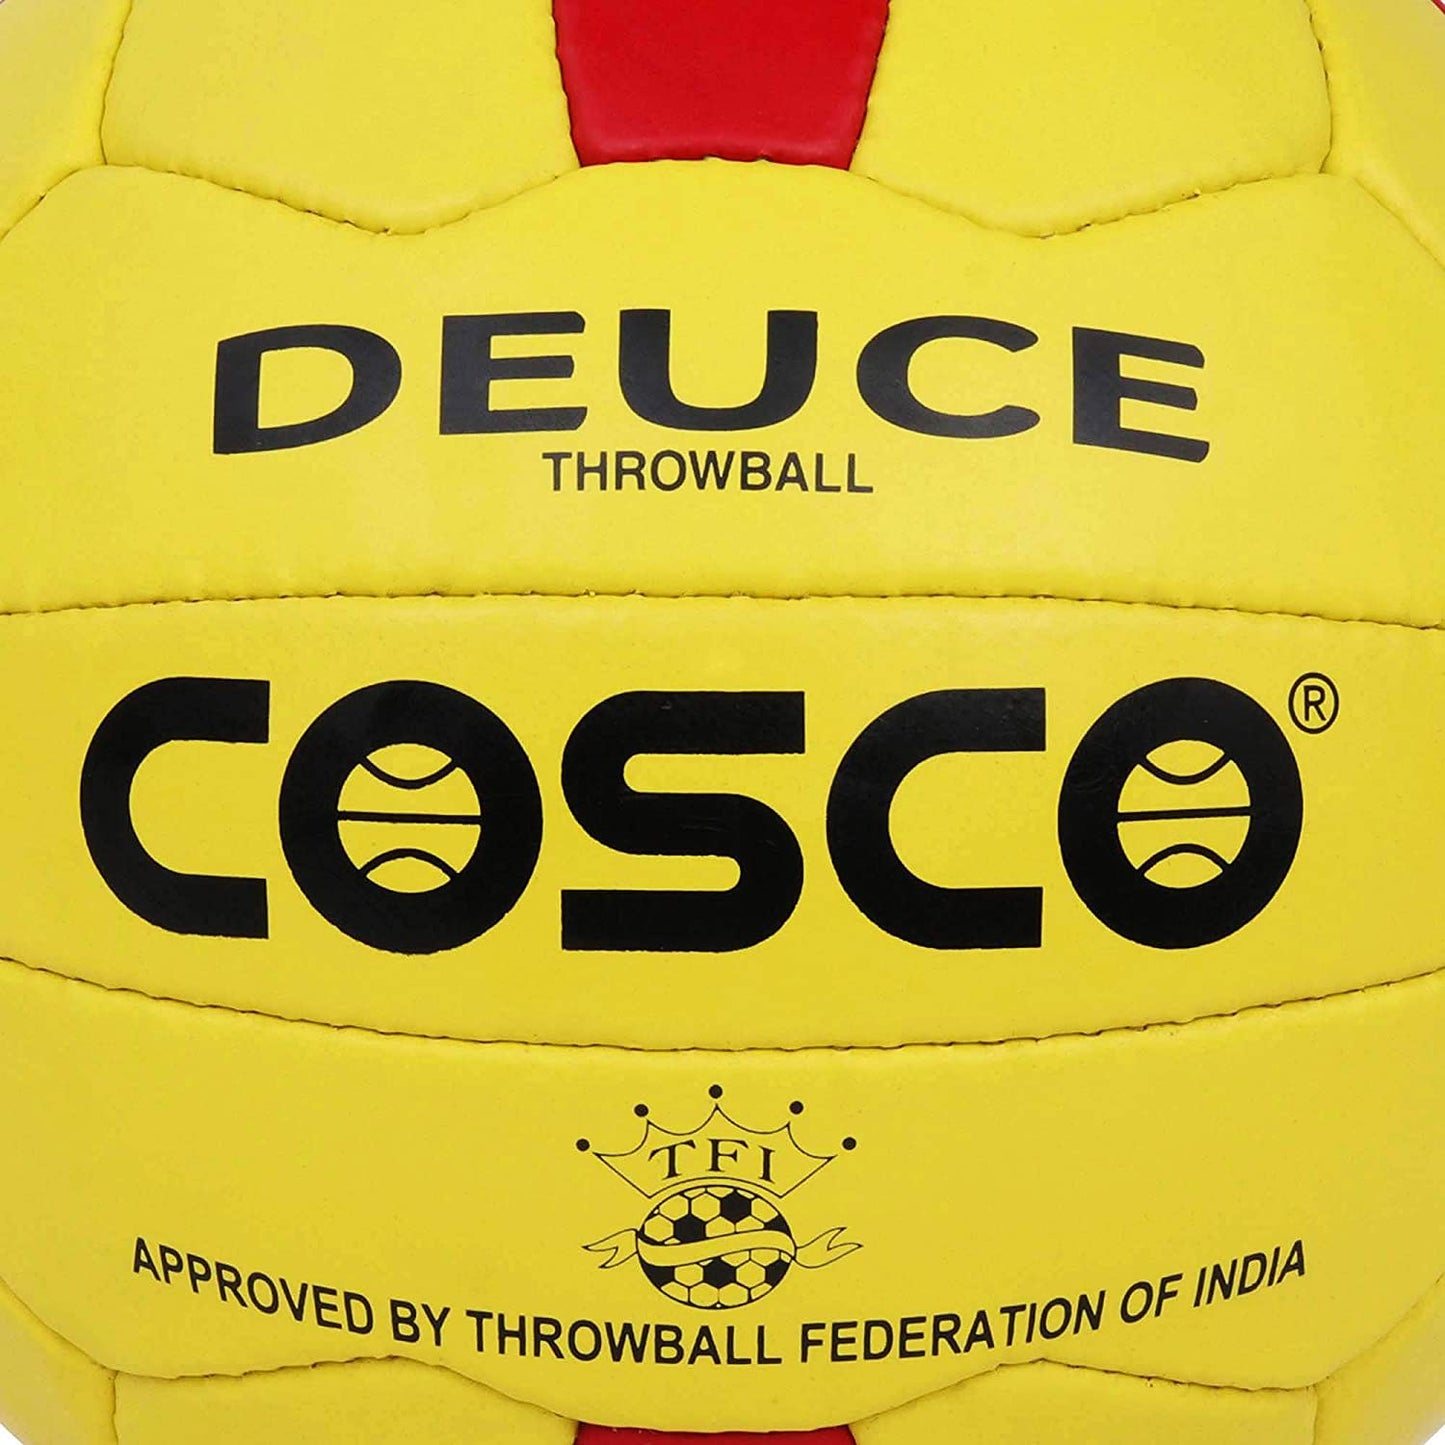 COSCO Deuce Throw Ball | Proffesional Throwballs in Dar Tanzania